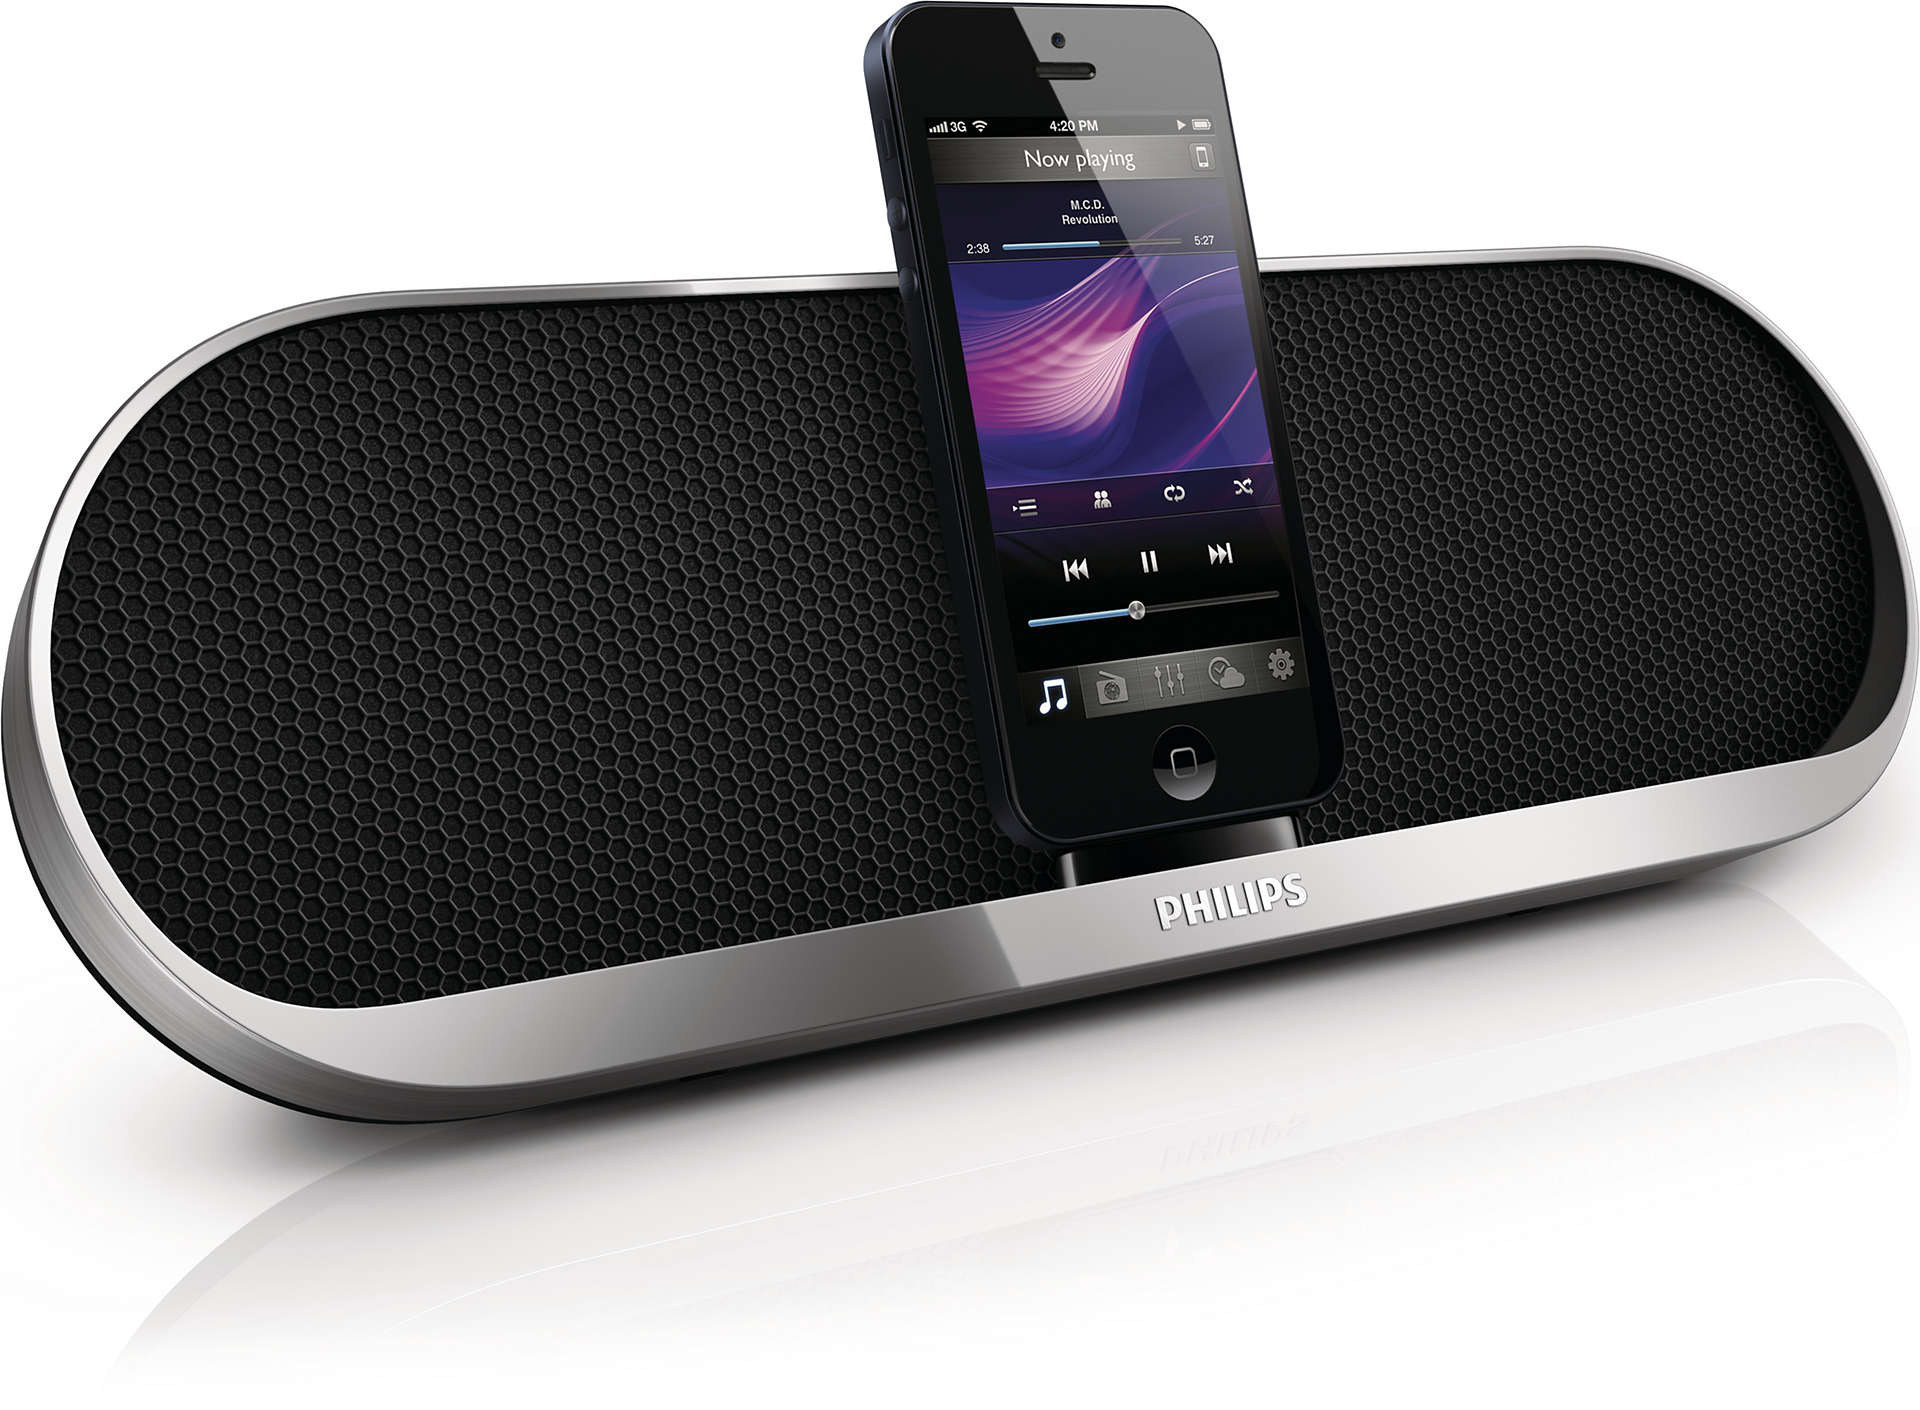 Philips docking speaker with Bluetooth